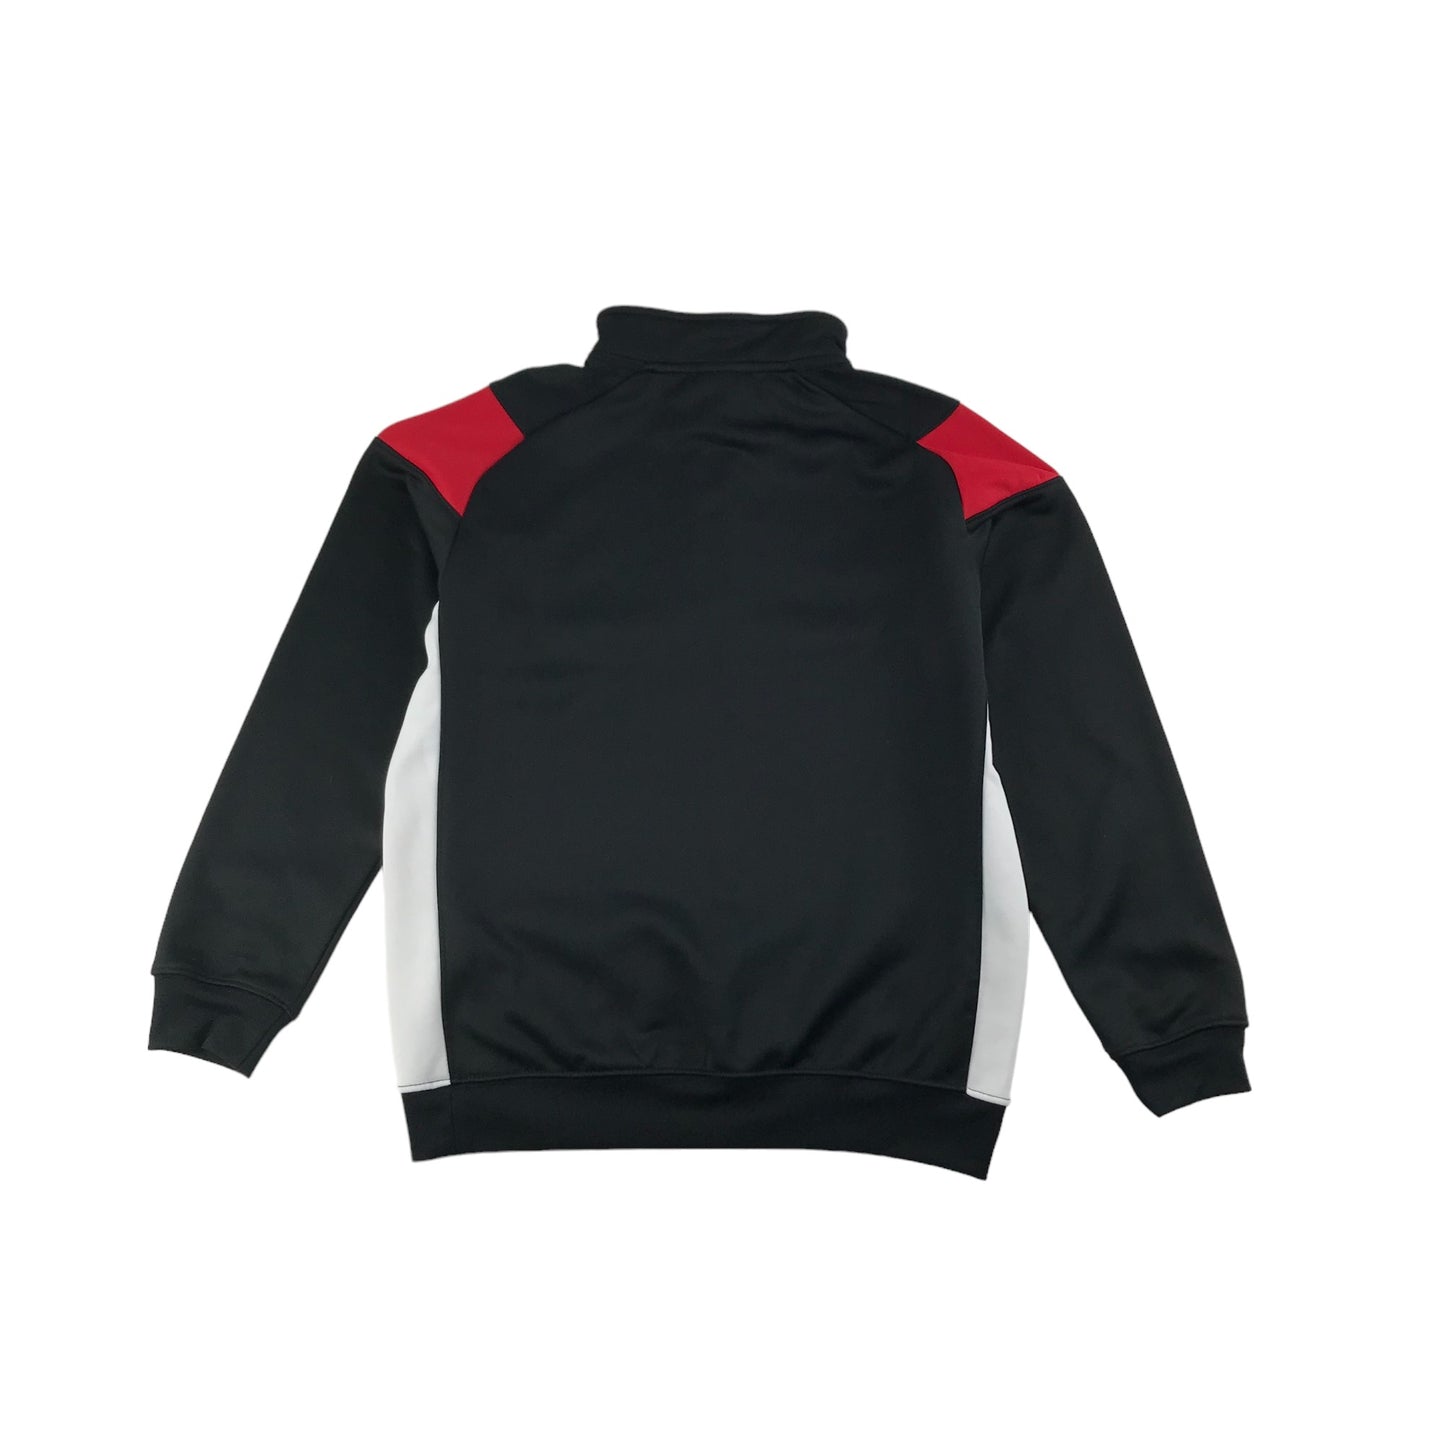 Joma Victoria Park FC Sweatshirt Age 11-12 Black and Red Half Zipper Sports Top